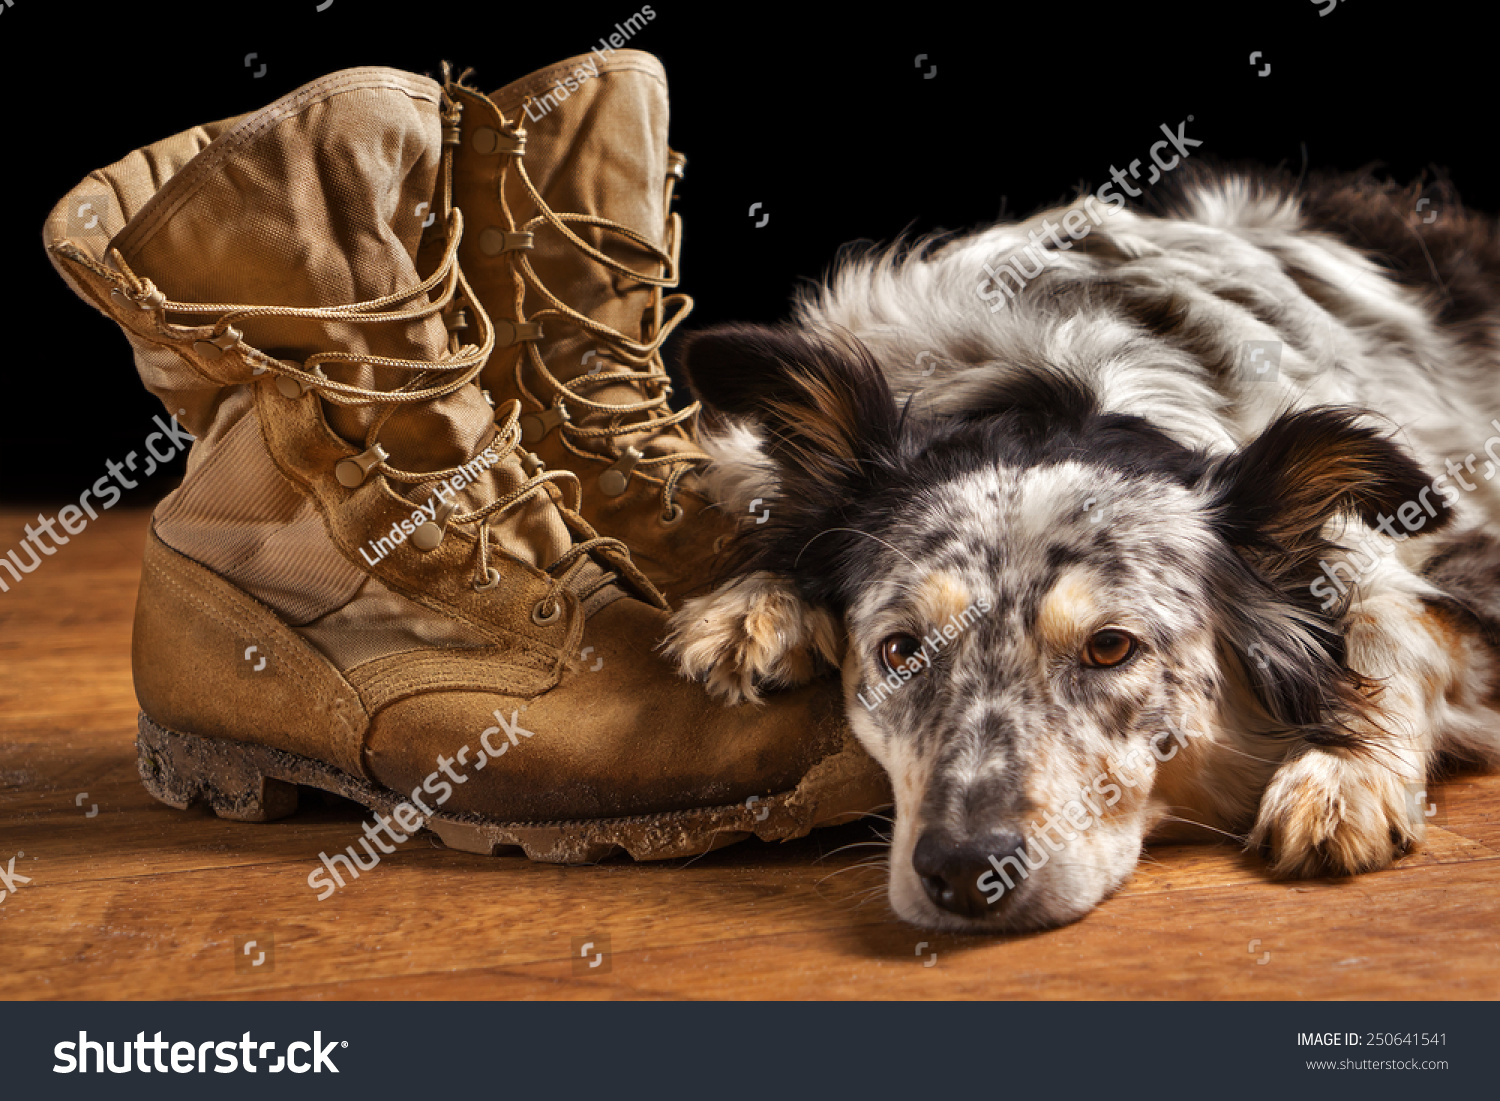 Border collie Australian shepherd dog lying on tan veteran military combat boots looking sad grief stricken in mourning depressed abandoned alone emotional bereaved worried feeling heartbreak #250641541